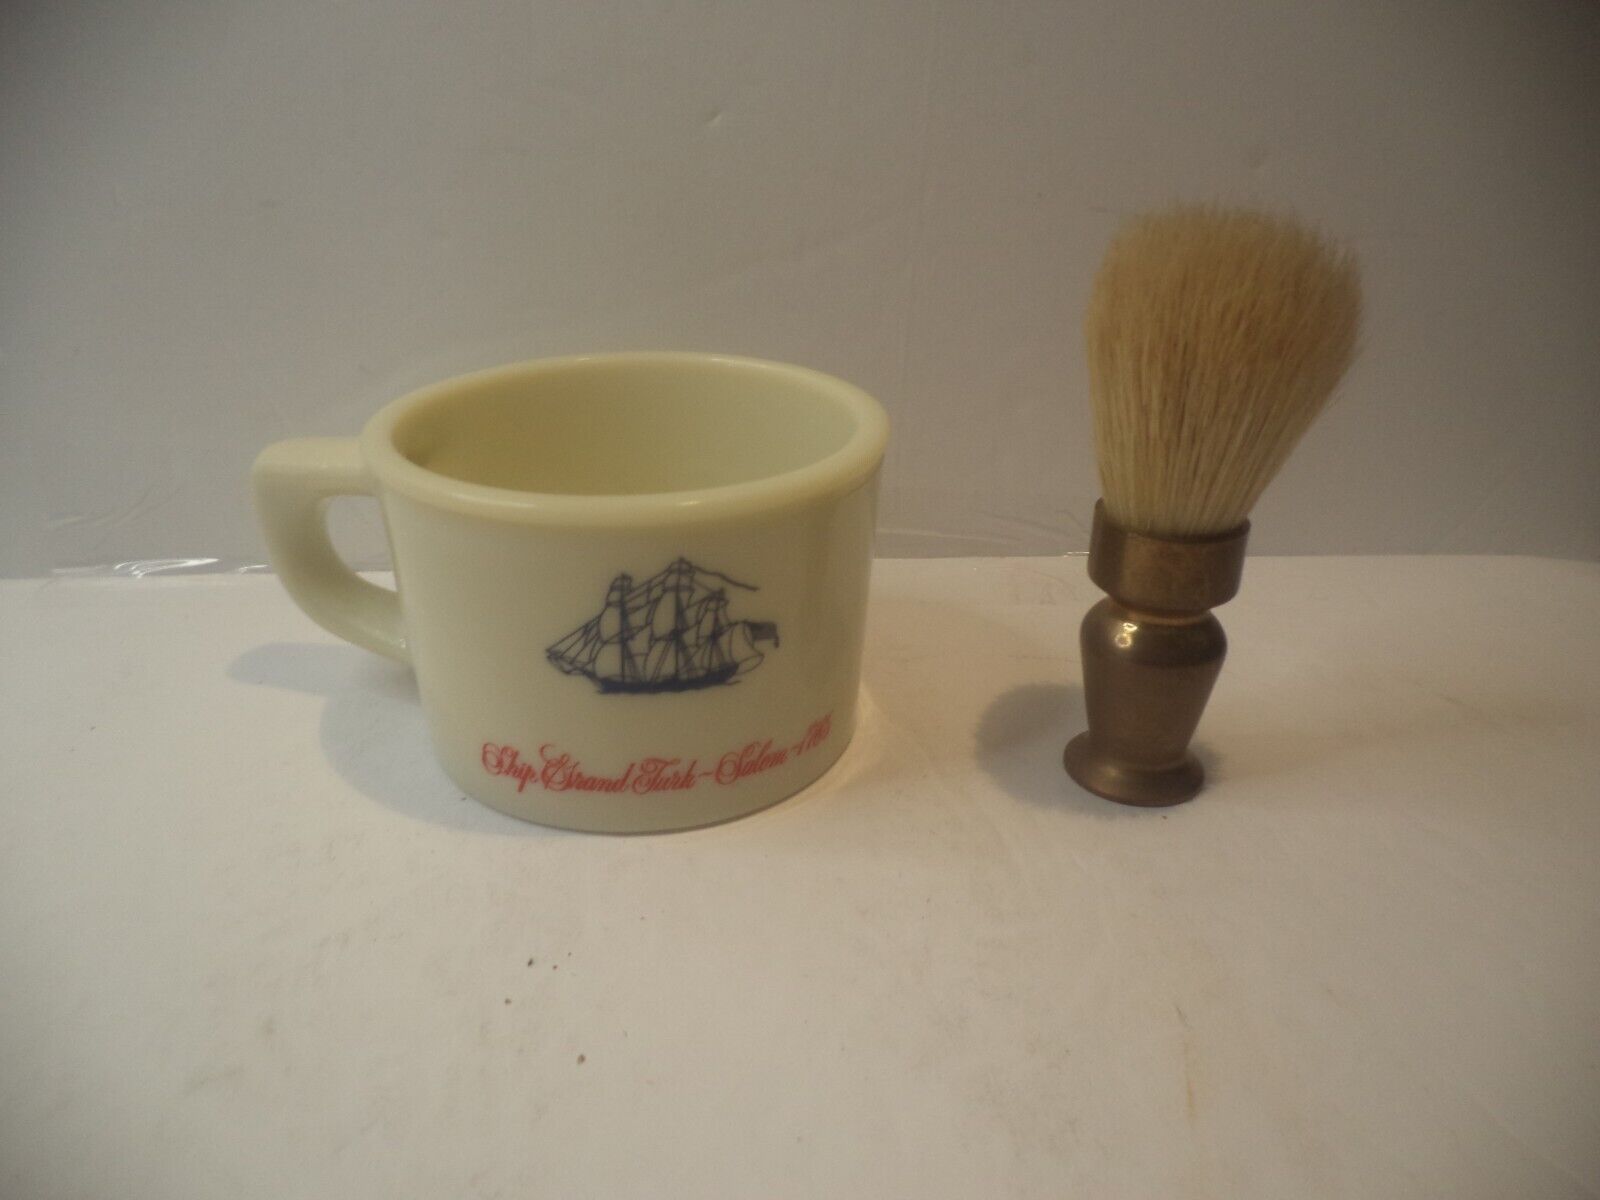 Old Spice Shaving Mug ship Recovery Salem 1794 and a Brass Handle Shaving Brush